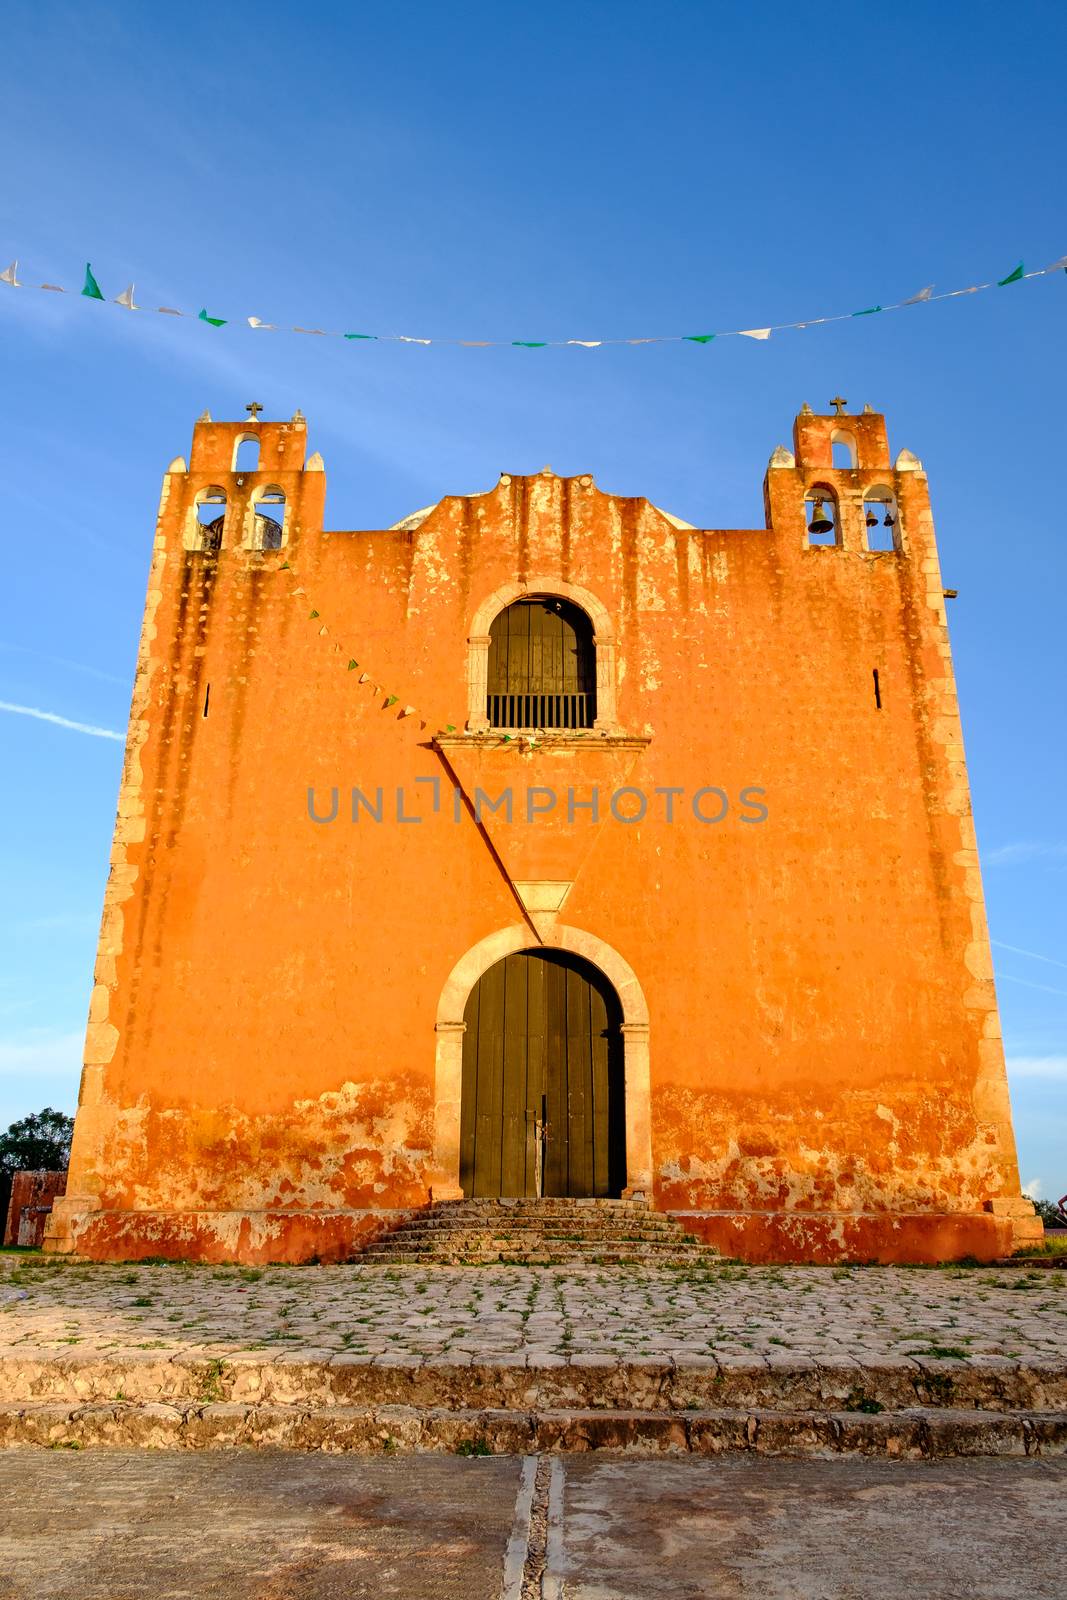 Typical colonial church in rural Mexican village Santa Elena, Mexico